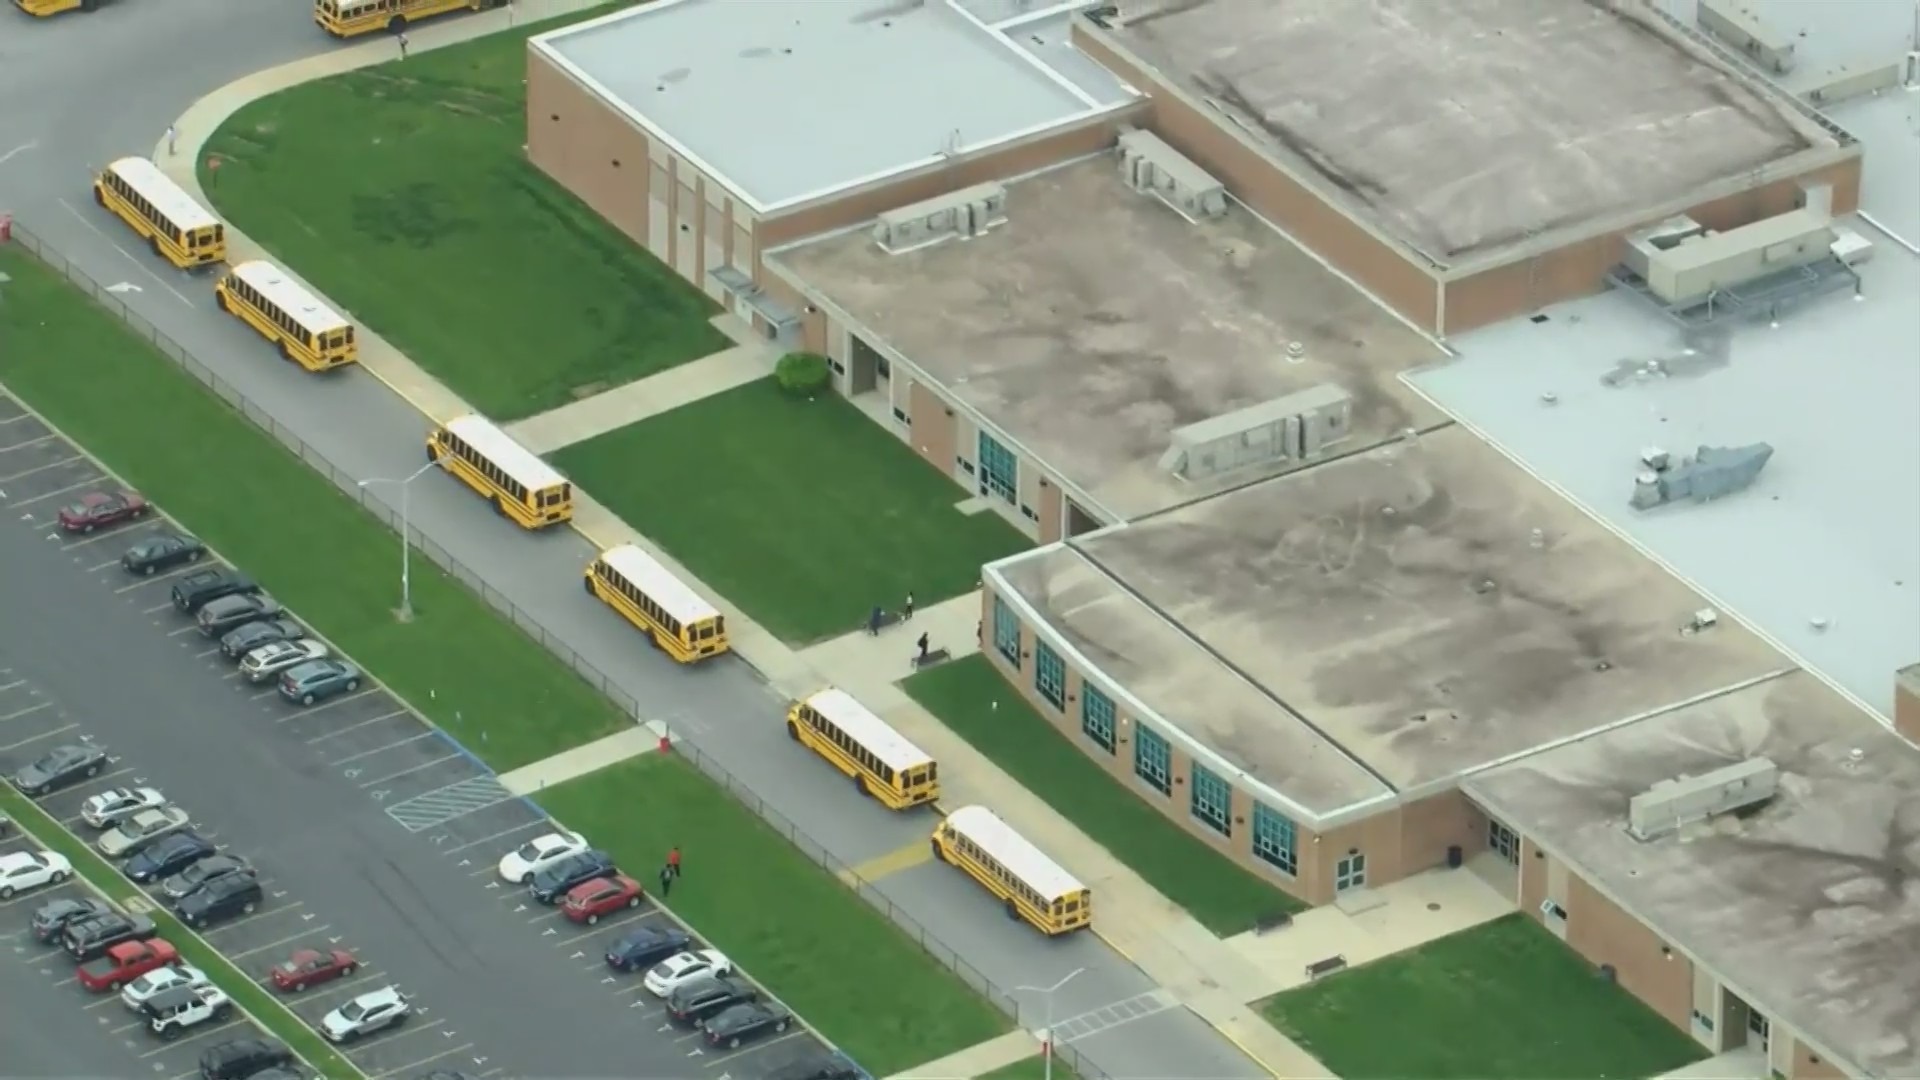 Coatesville Area Senior High School On Lockdown Due Investigation